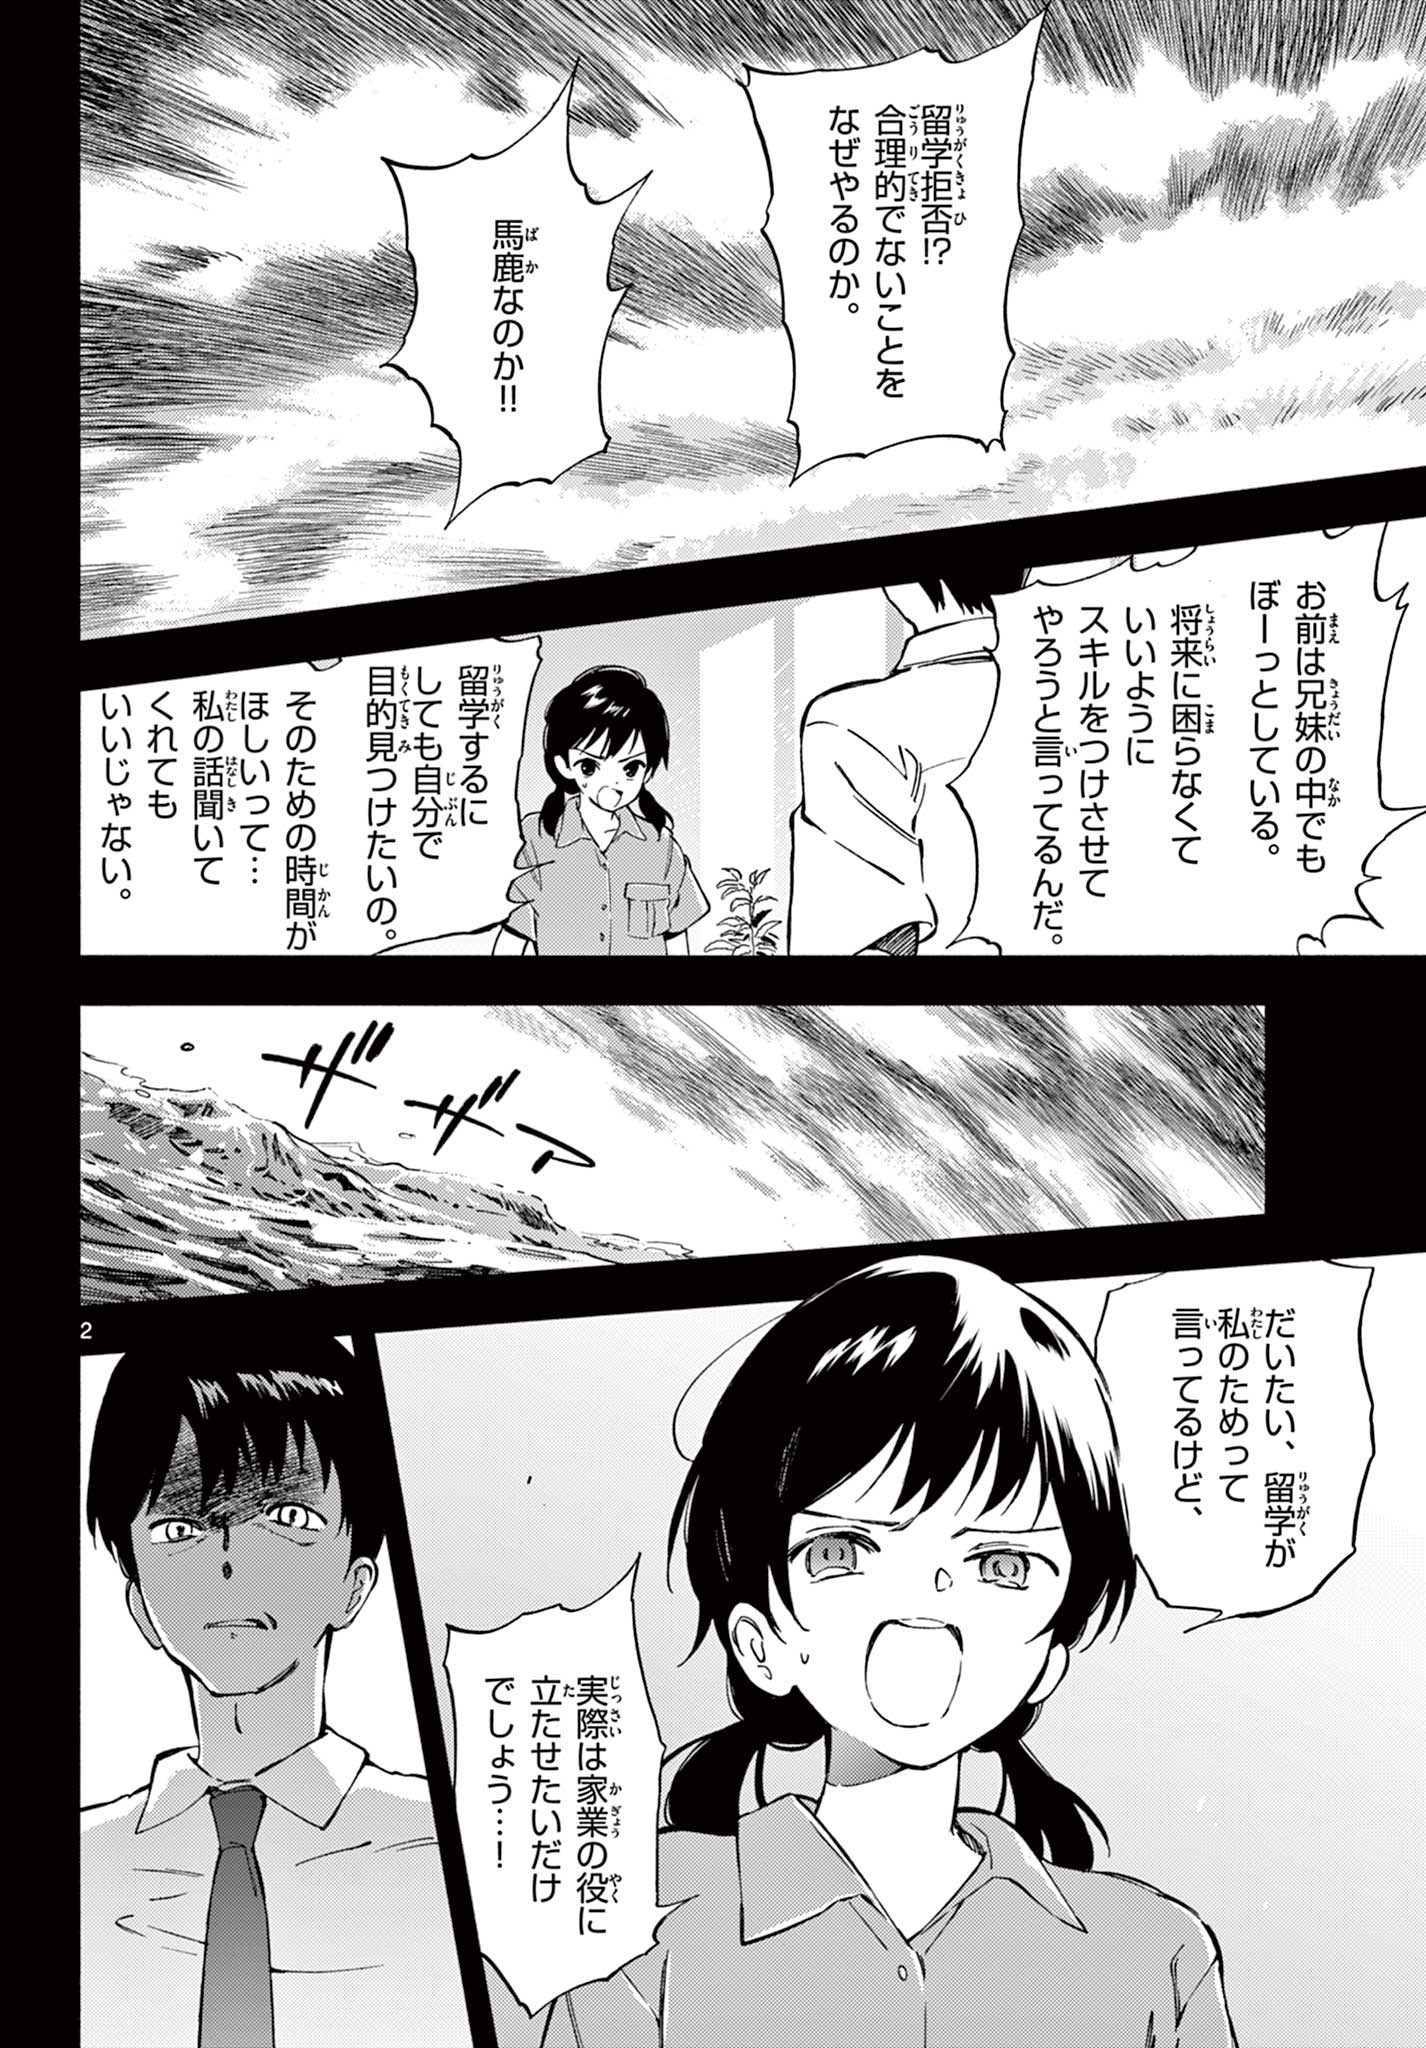 Nami no Shijima no Horizont - Chapter 13.1 - Page 2